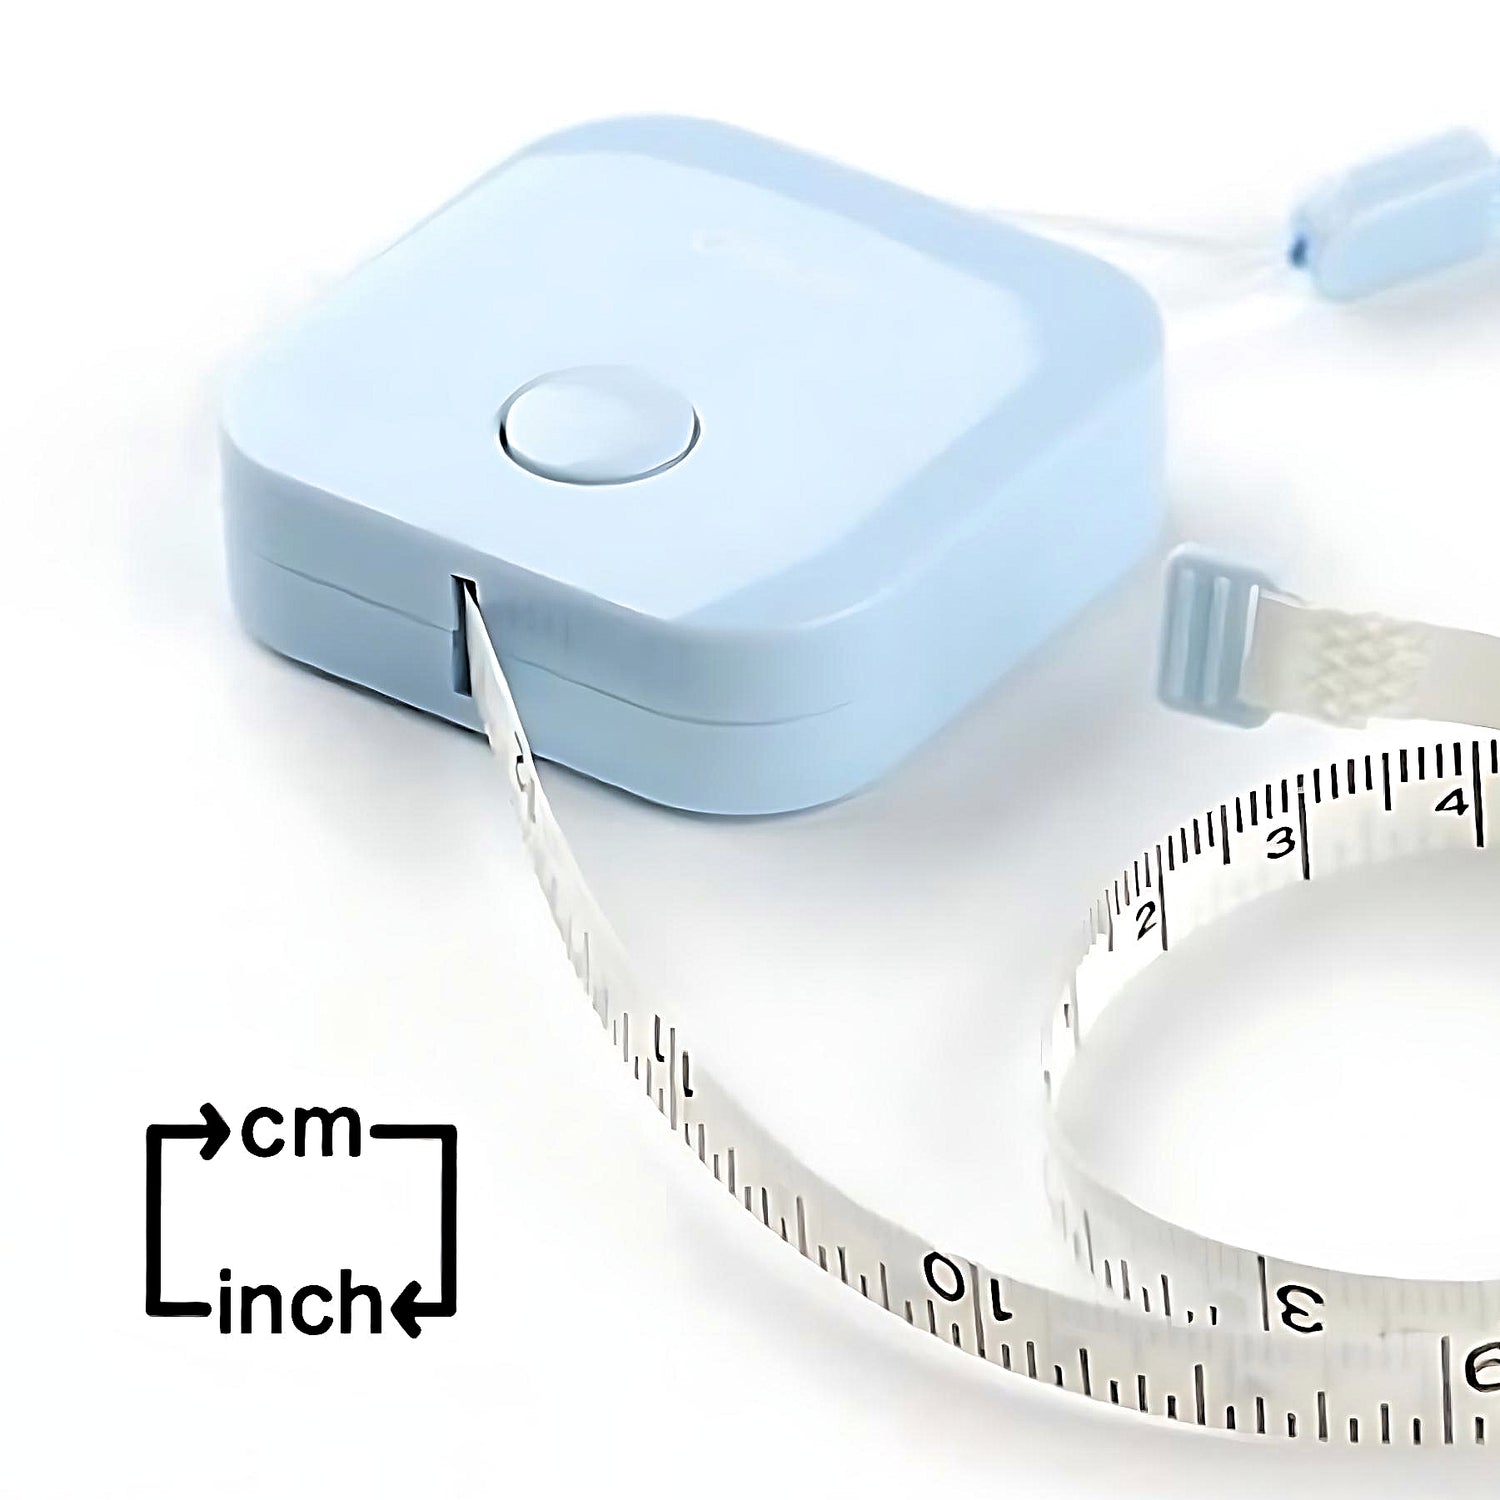 Mini Crafting Measuring Tape, Mini Tape Measures 